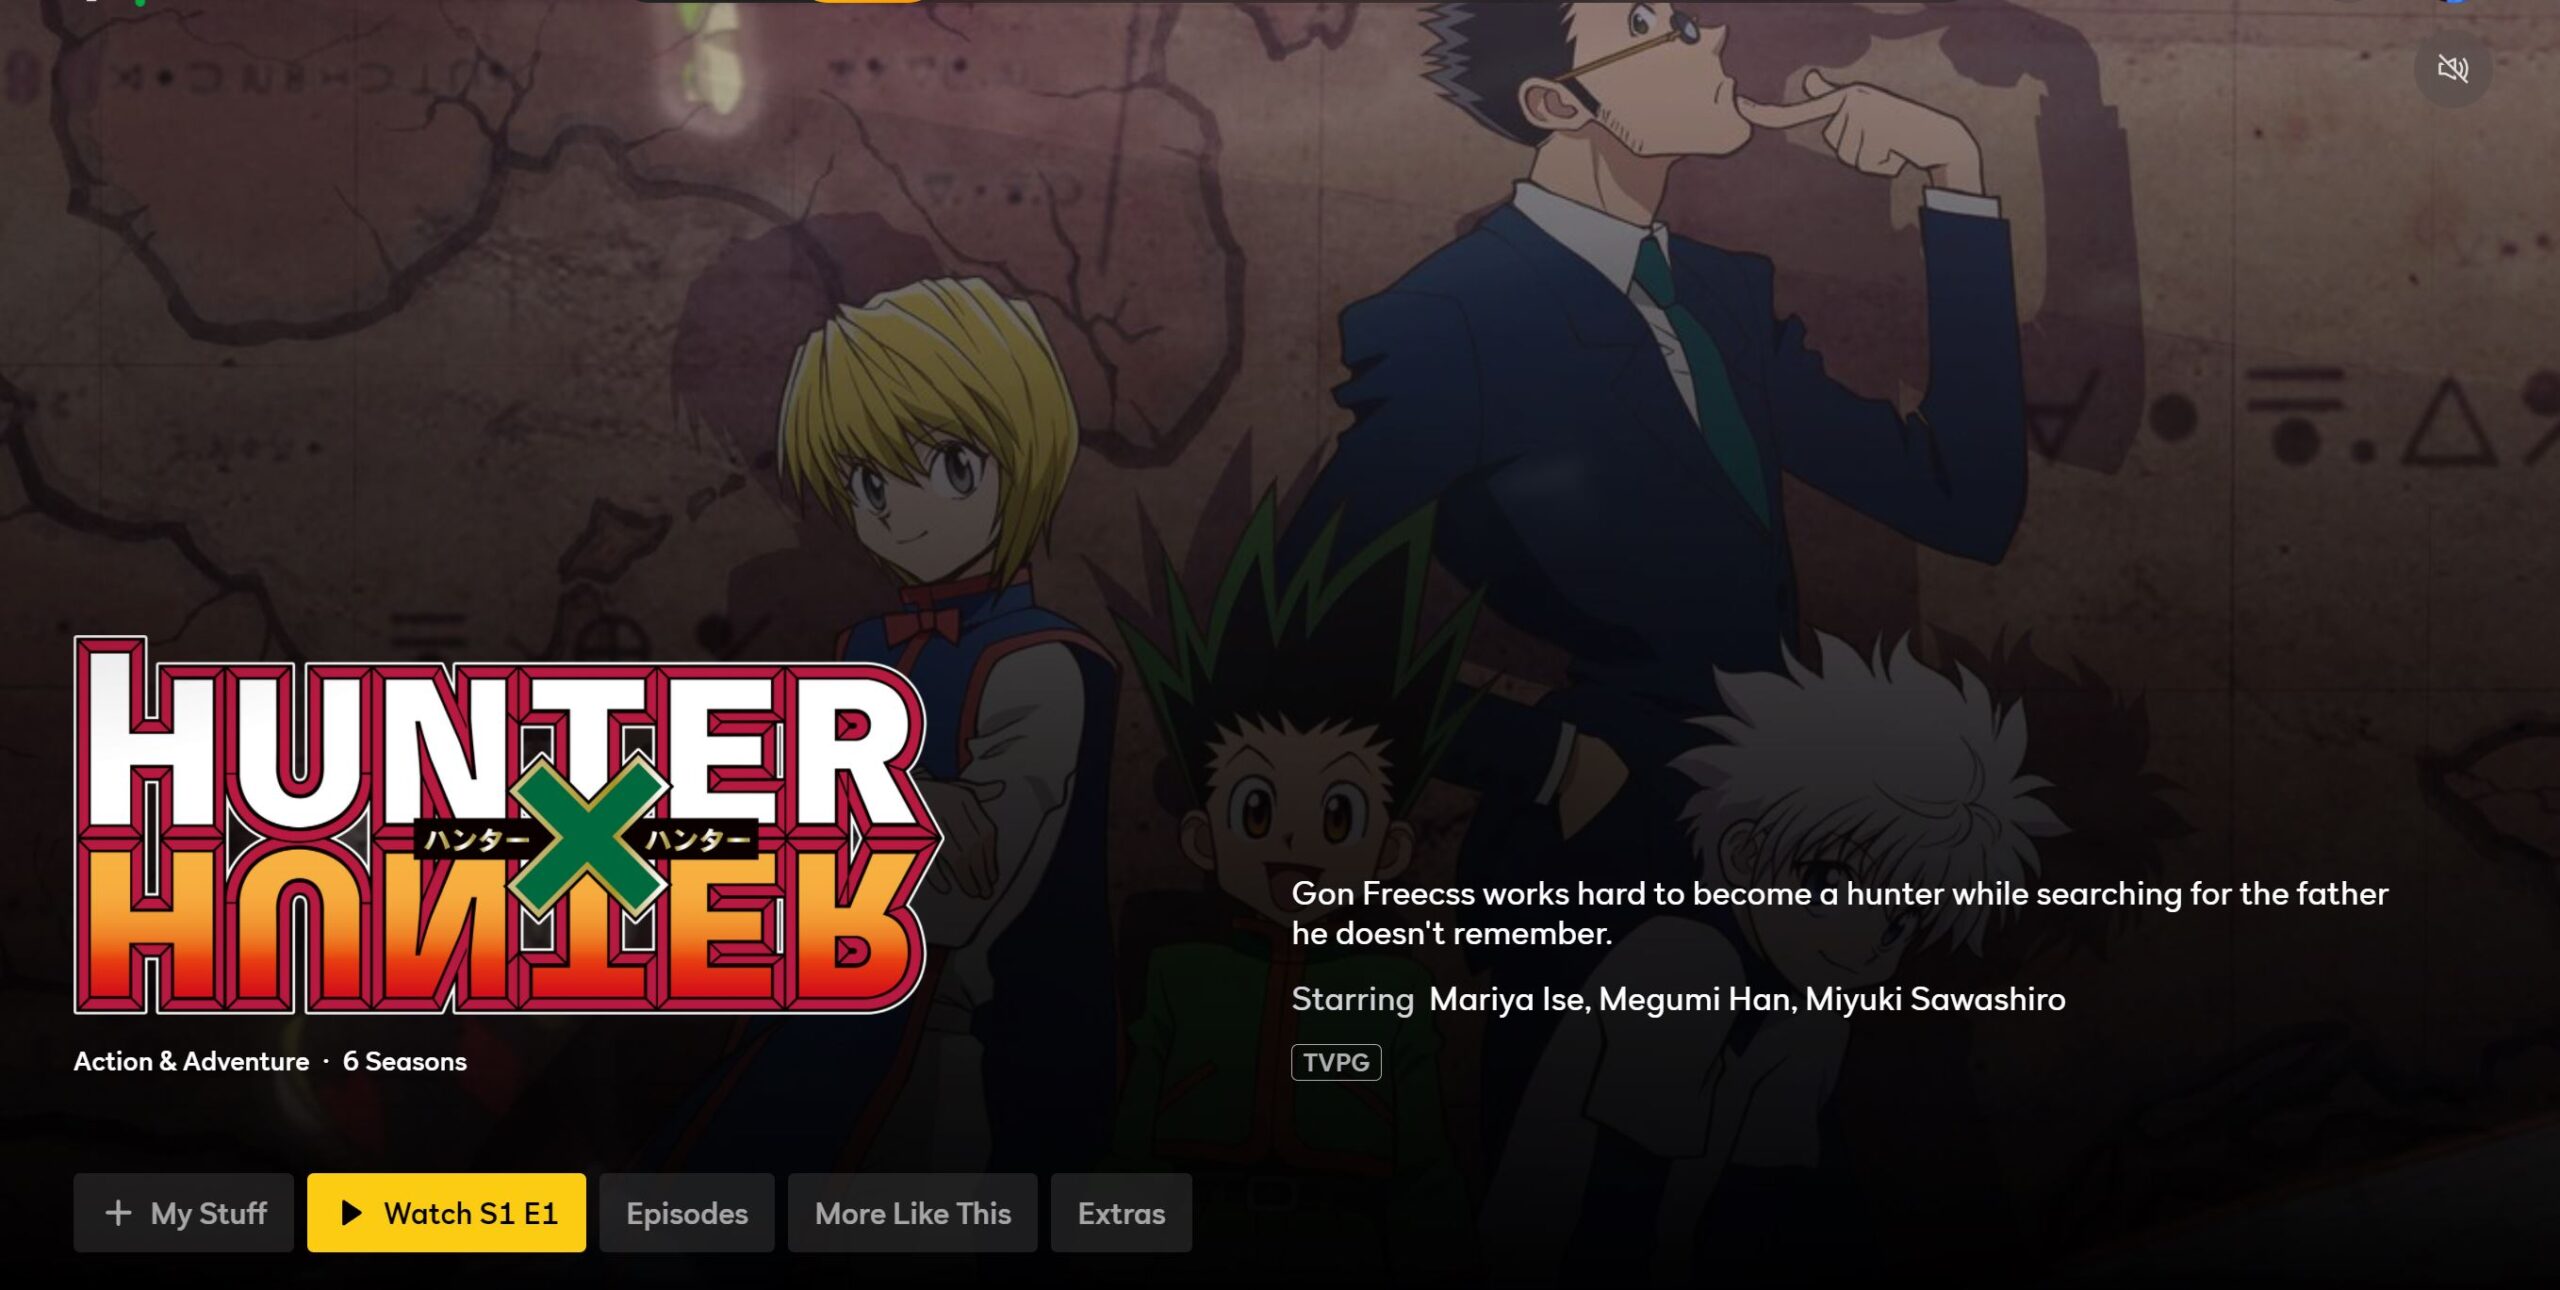 UK Anime Network - Hunter x Hunter 2011 anime series added to Netflix UK